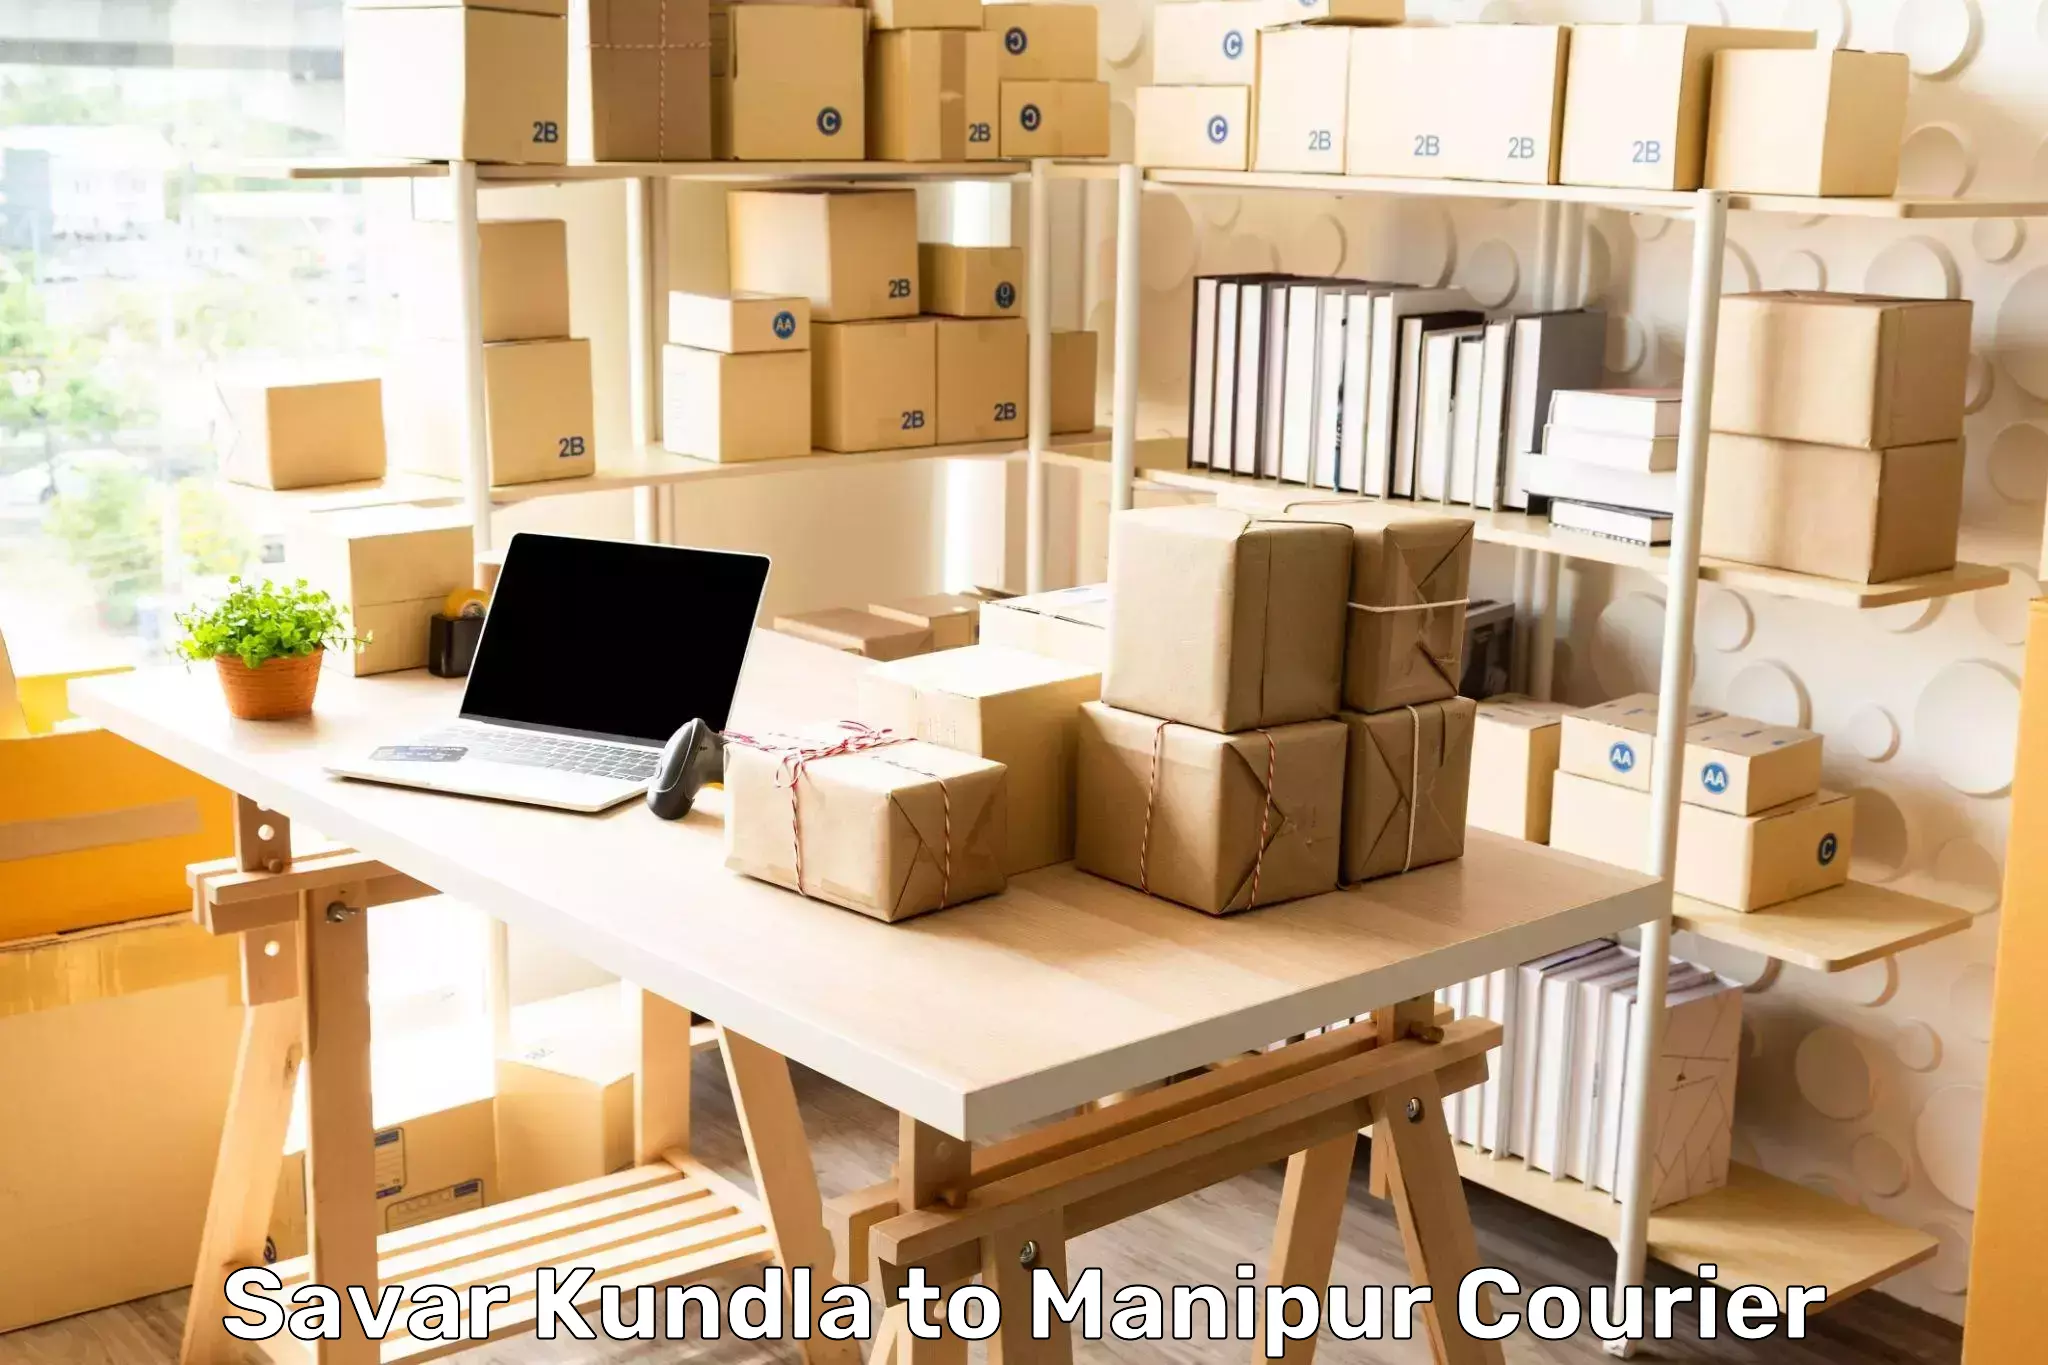 Courier insurance Savar Kundla to Manipur